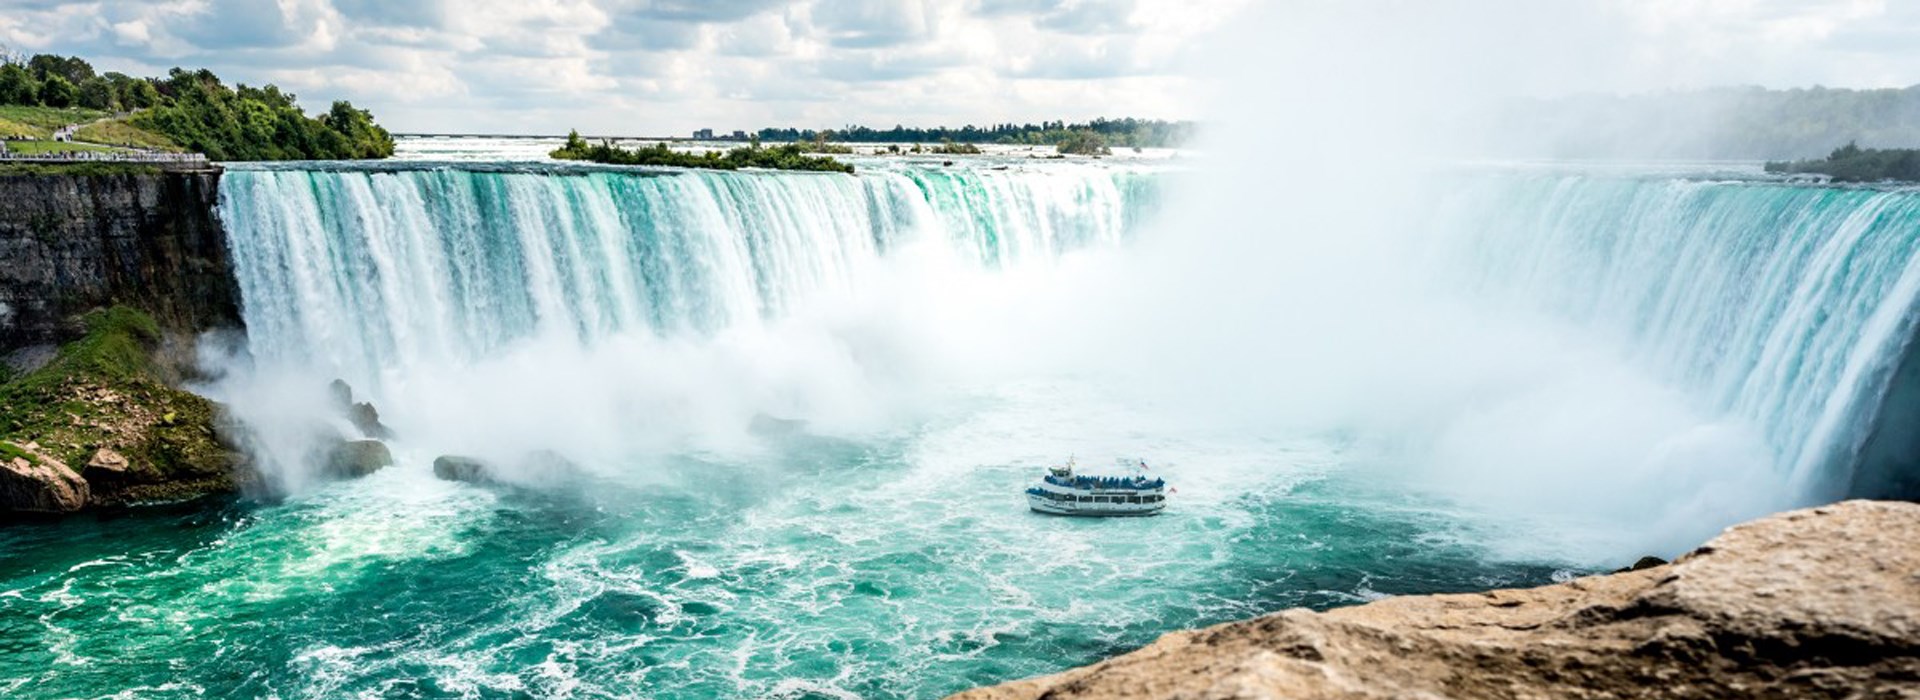 Visiter Les chutes du Niagara - Canada